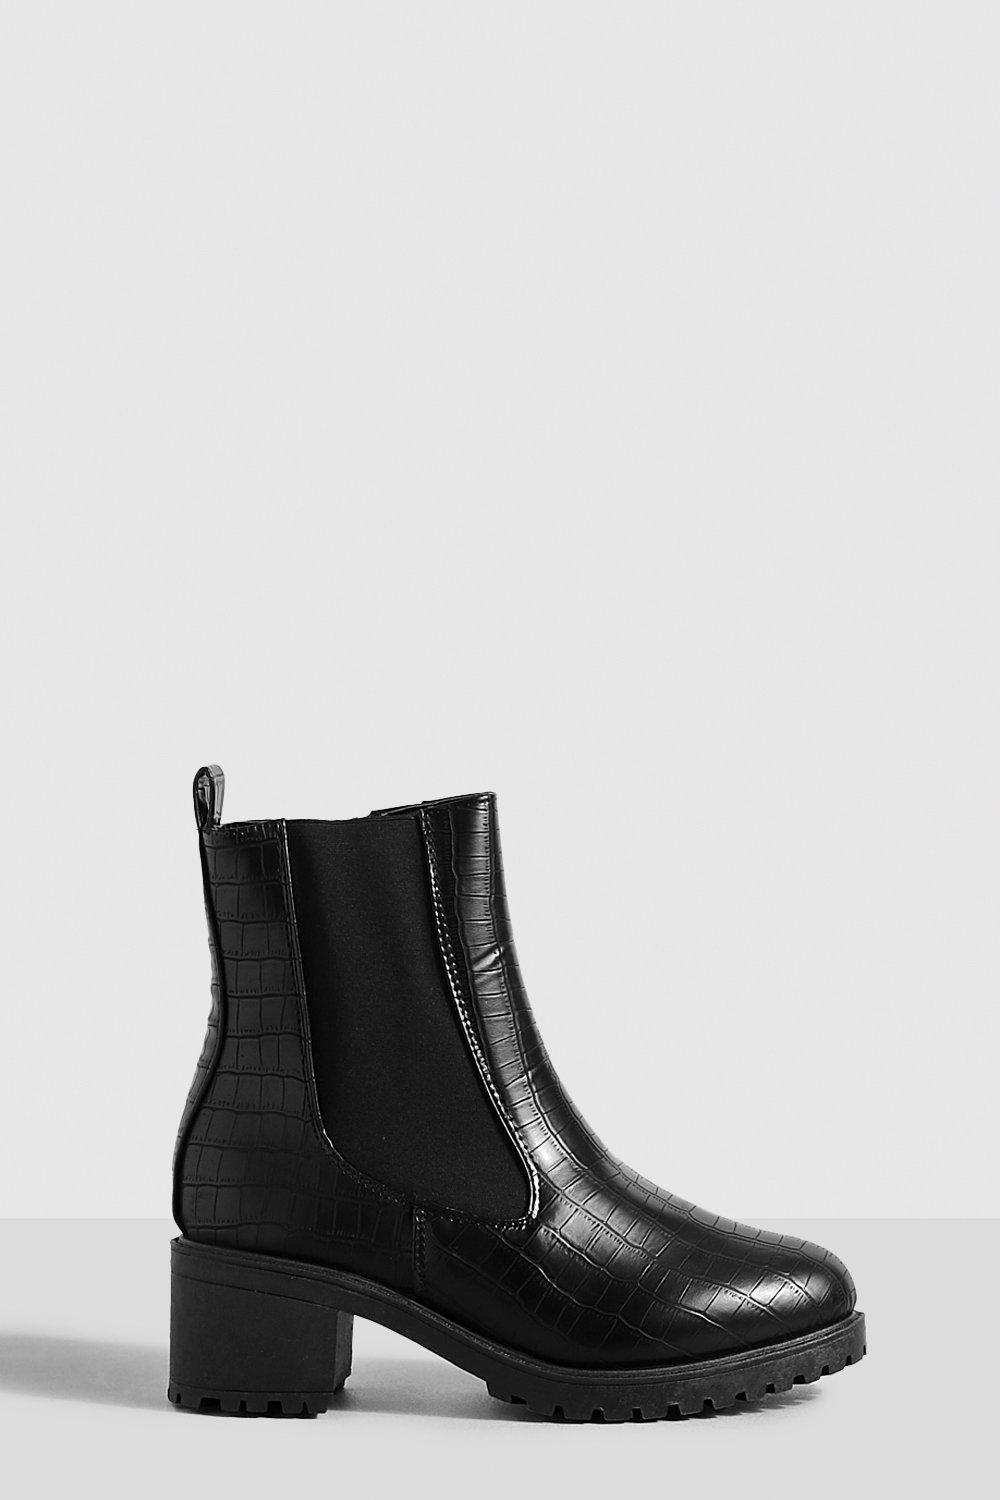 womens tab detail low block heel croc chelsea boots - black - 6, black